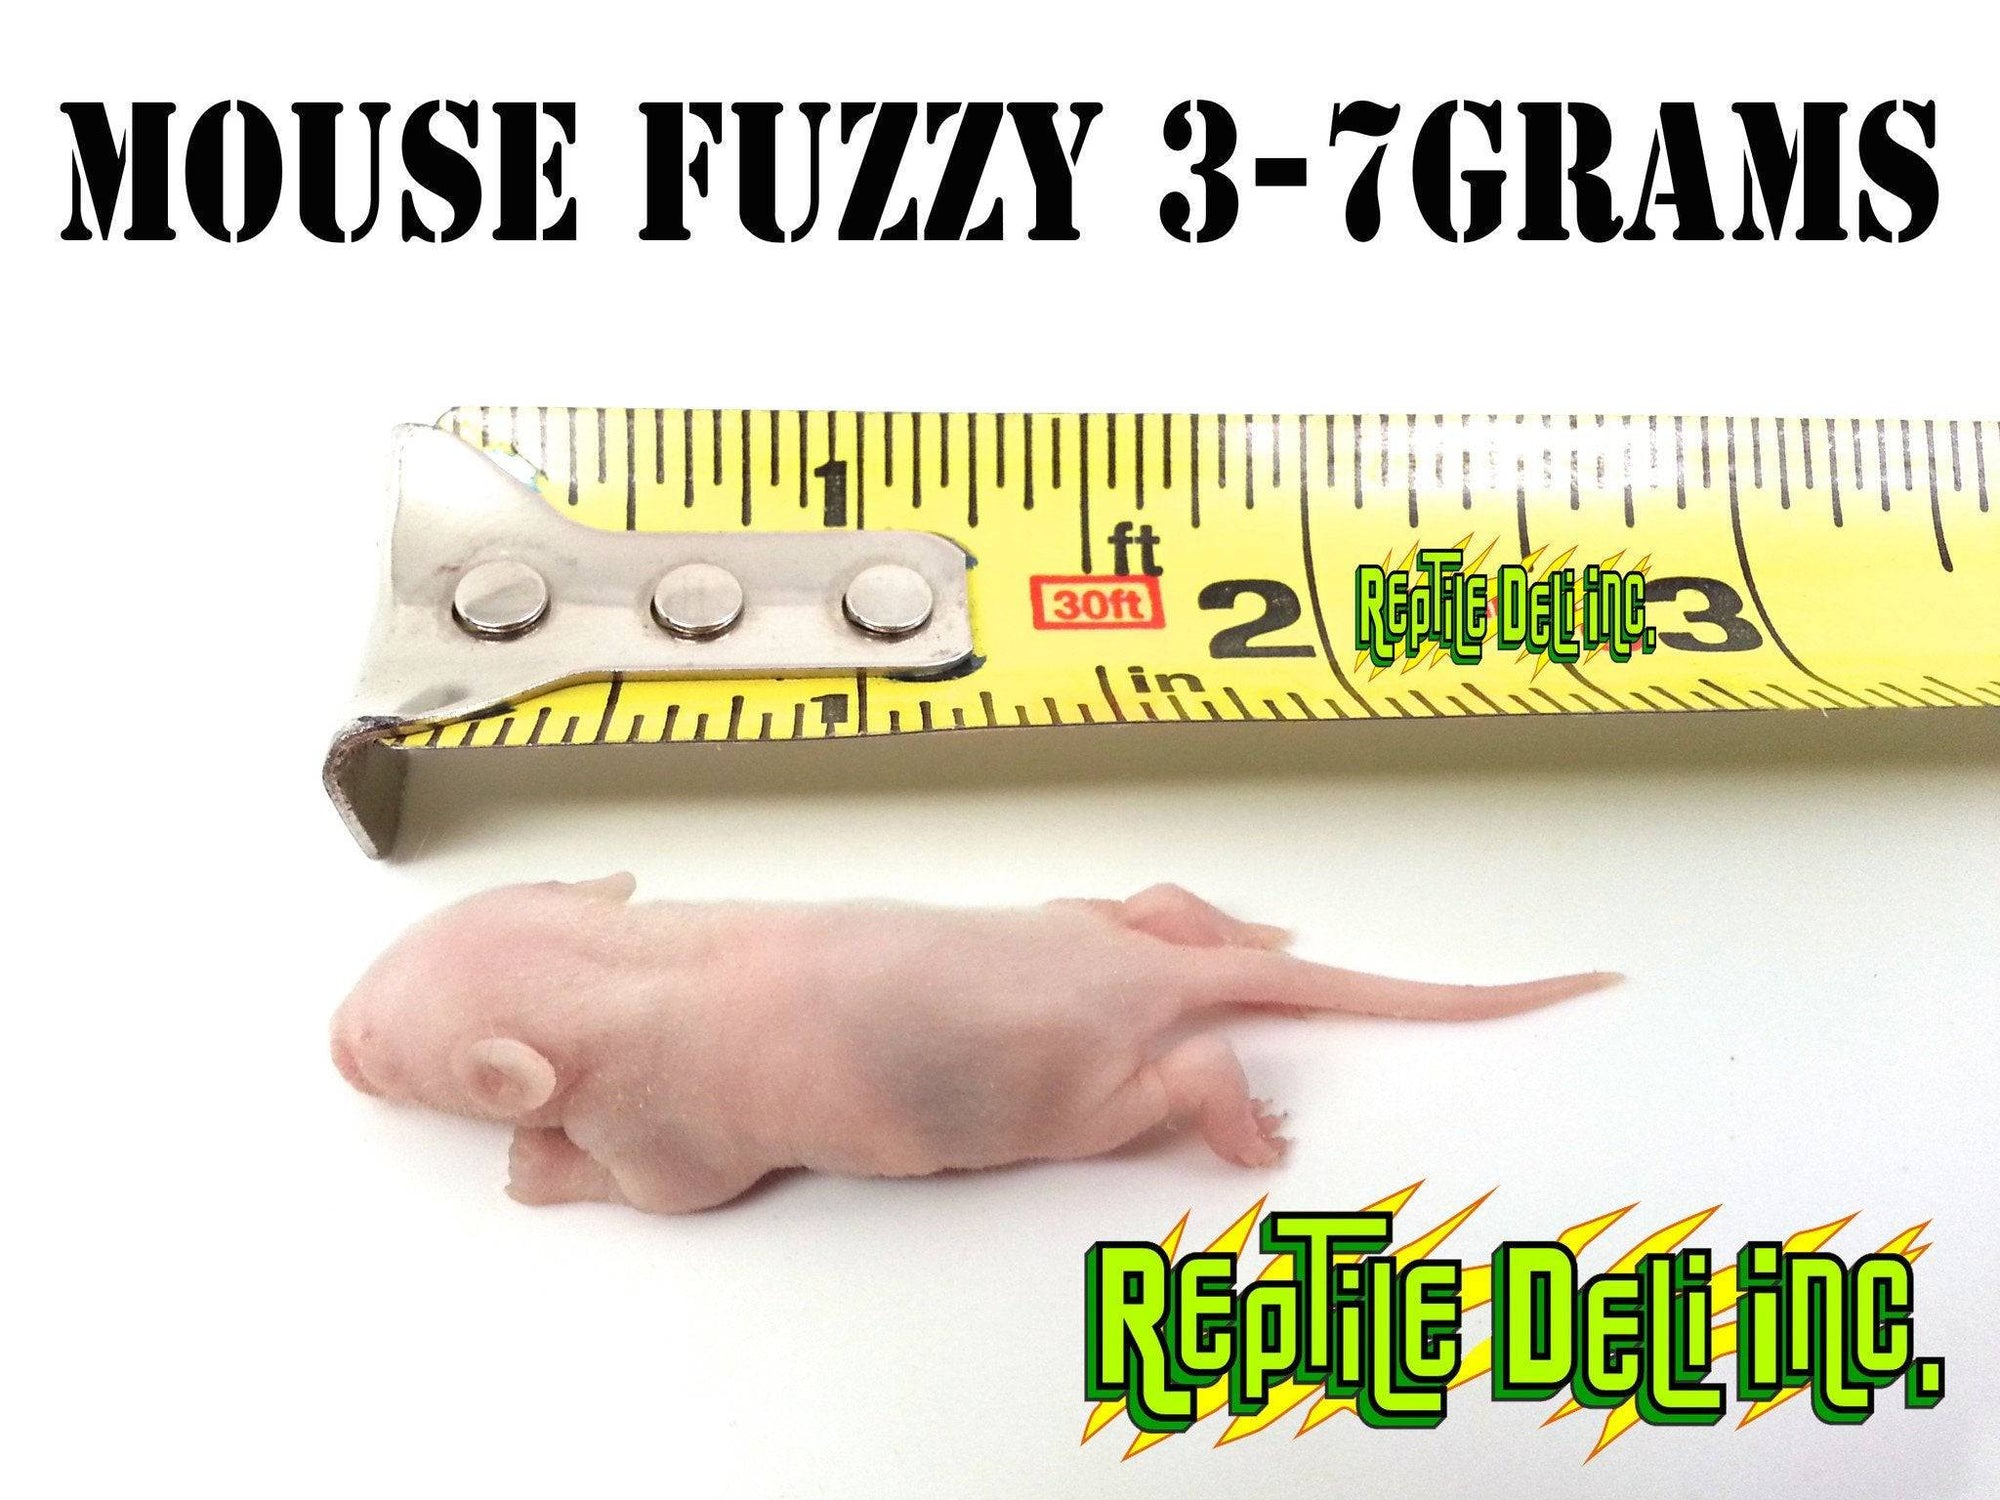 Frozen Mouse - Fuzzy - Reptile Deli Inc.